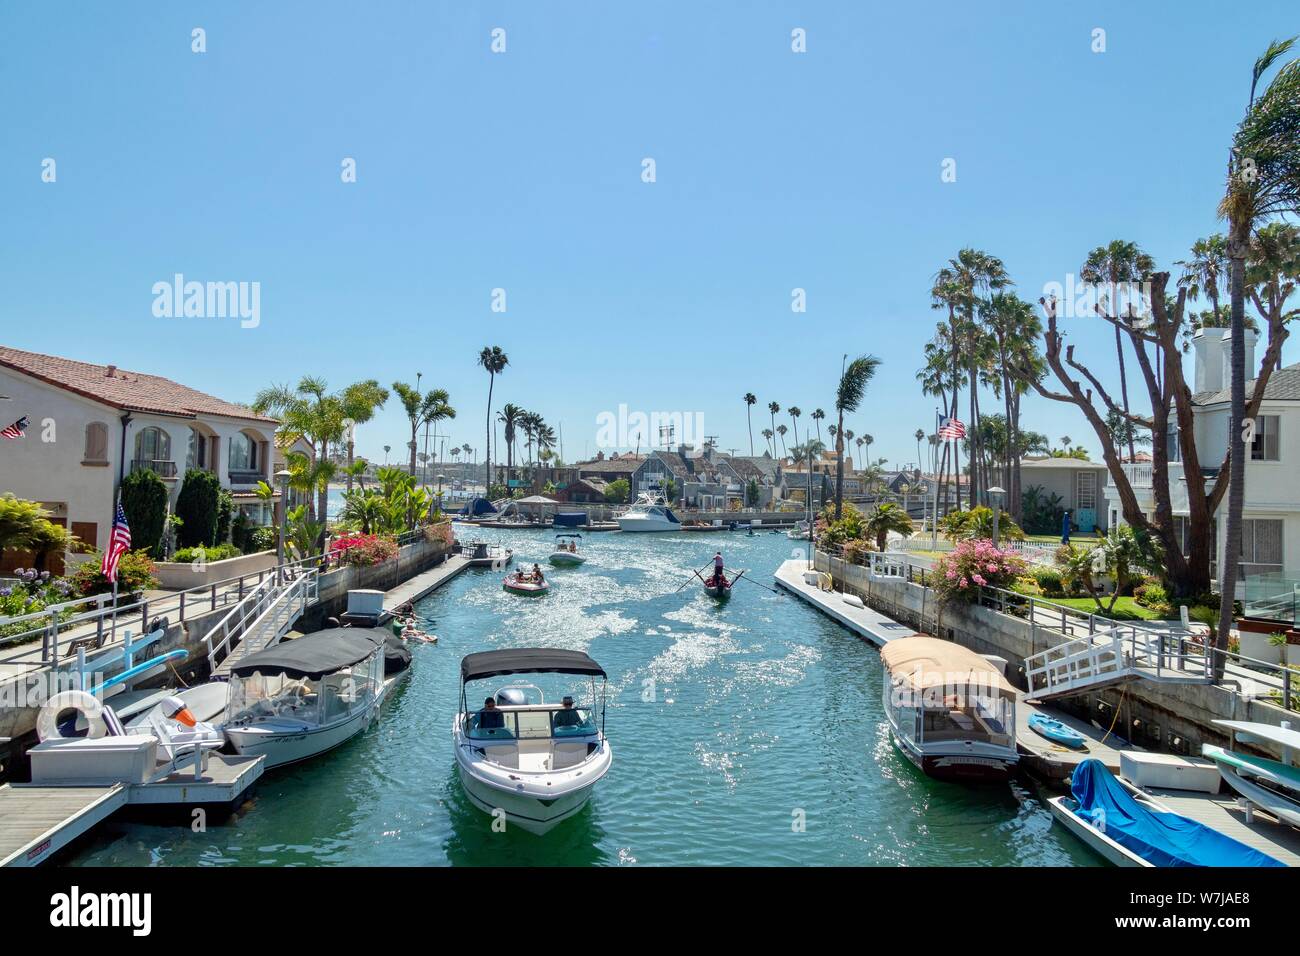 Canals in the Naples Island Neighborhood of Long Beach California Stock Photo